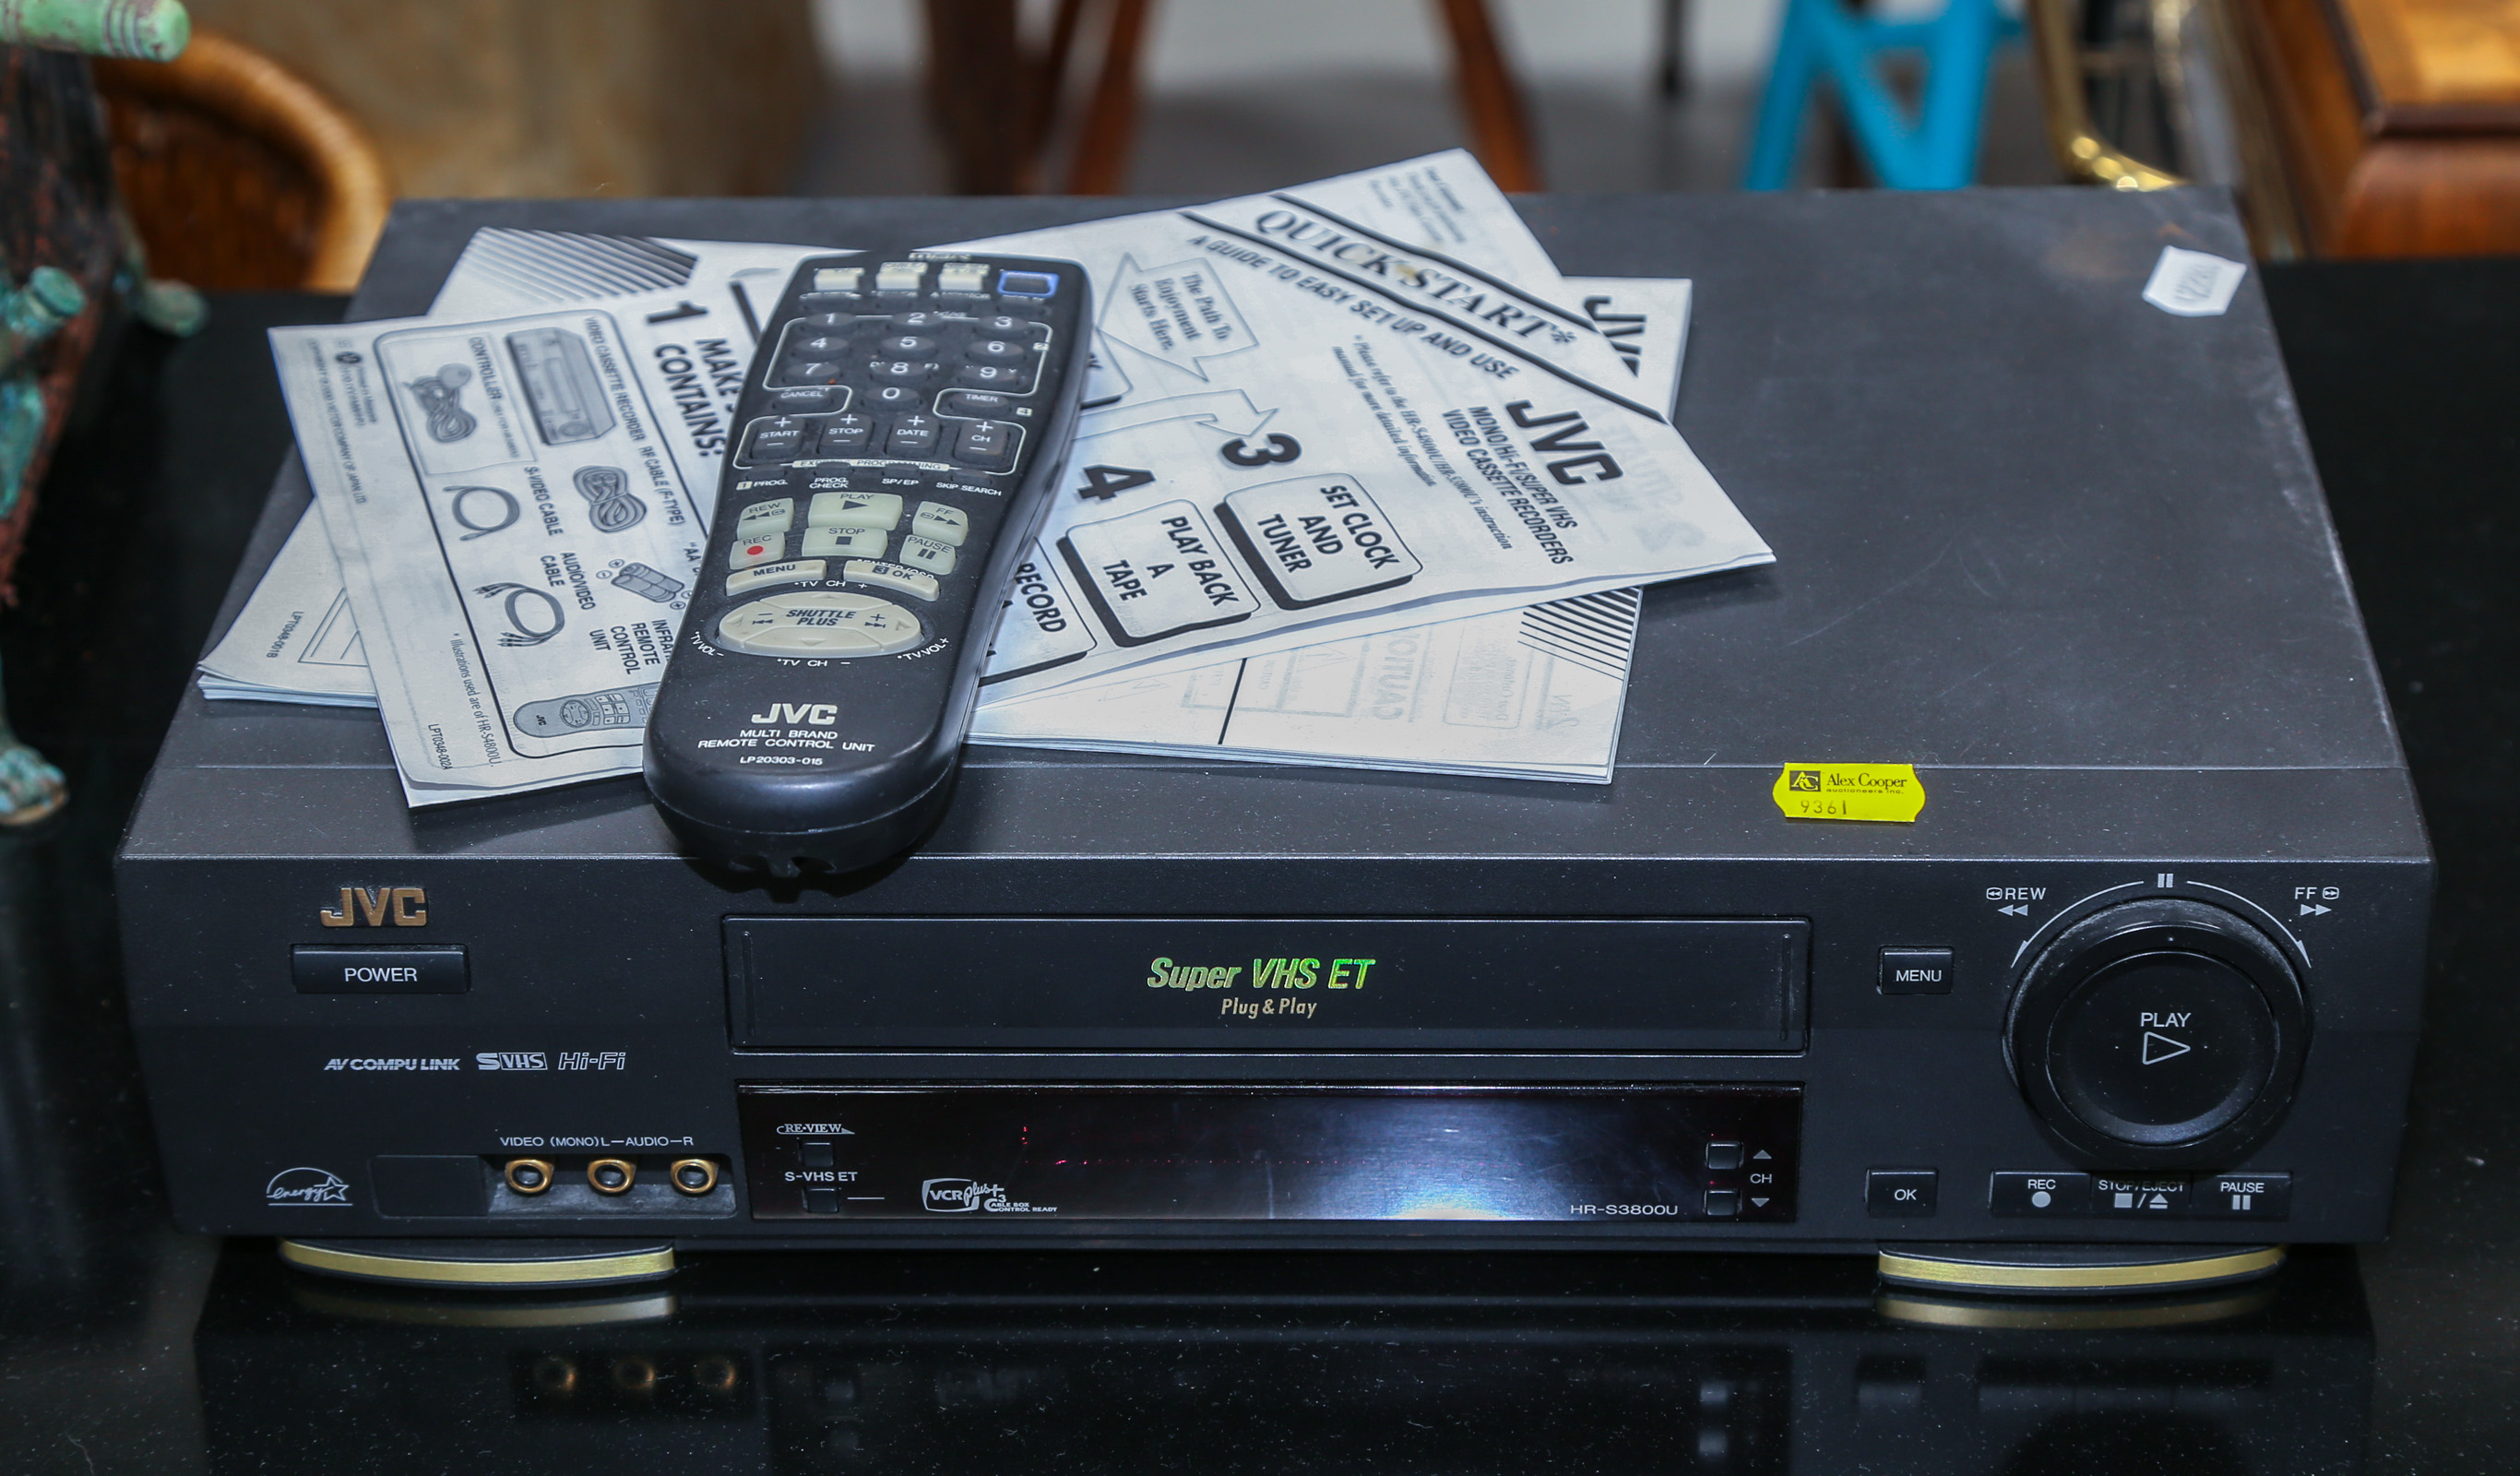 JVC SUPER VHS ET PLAYER Model HR-S3800U,